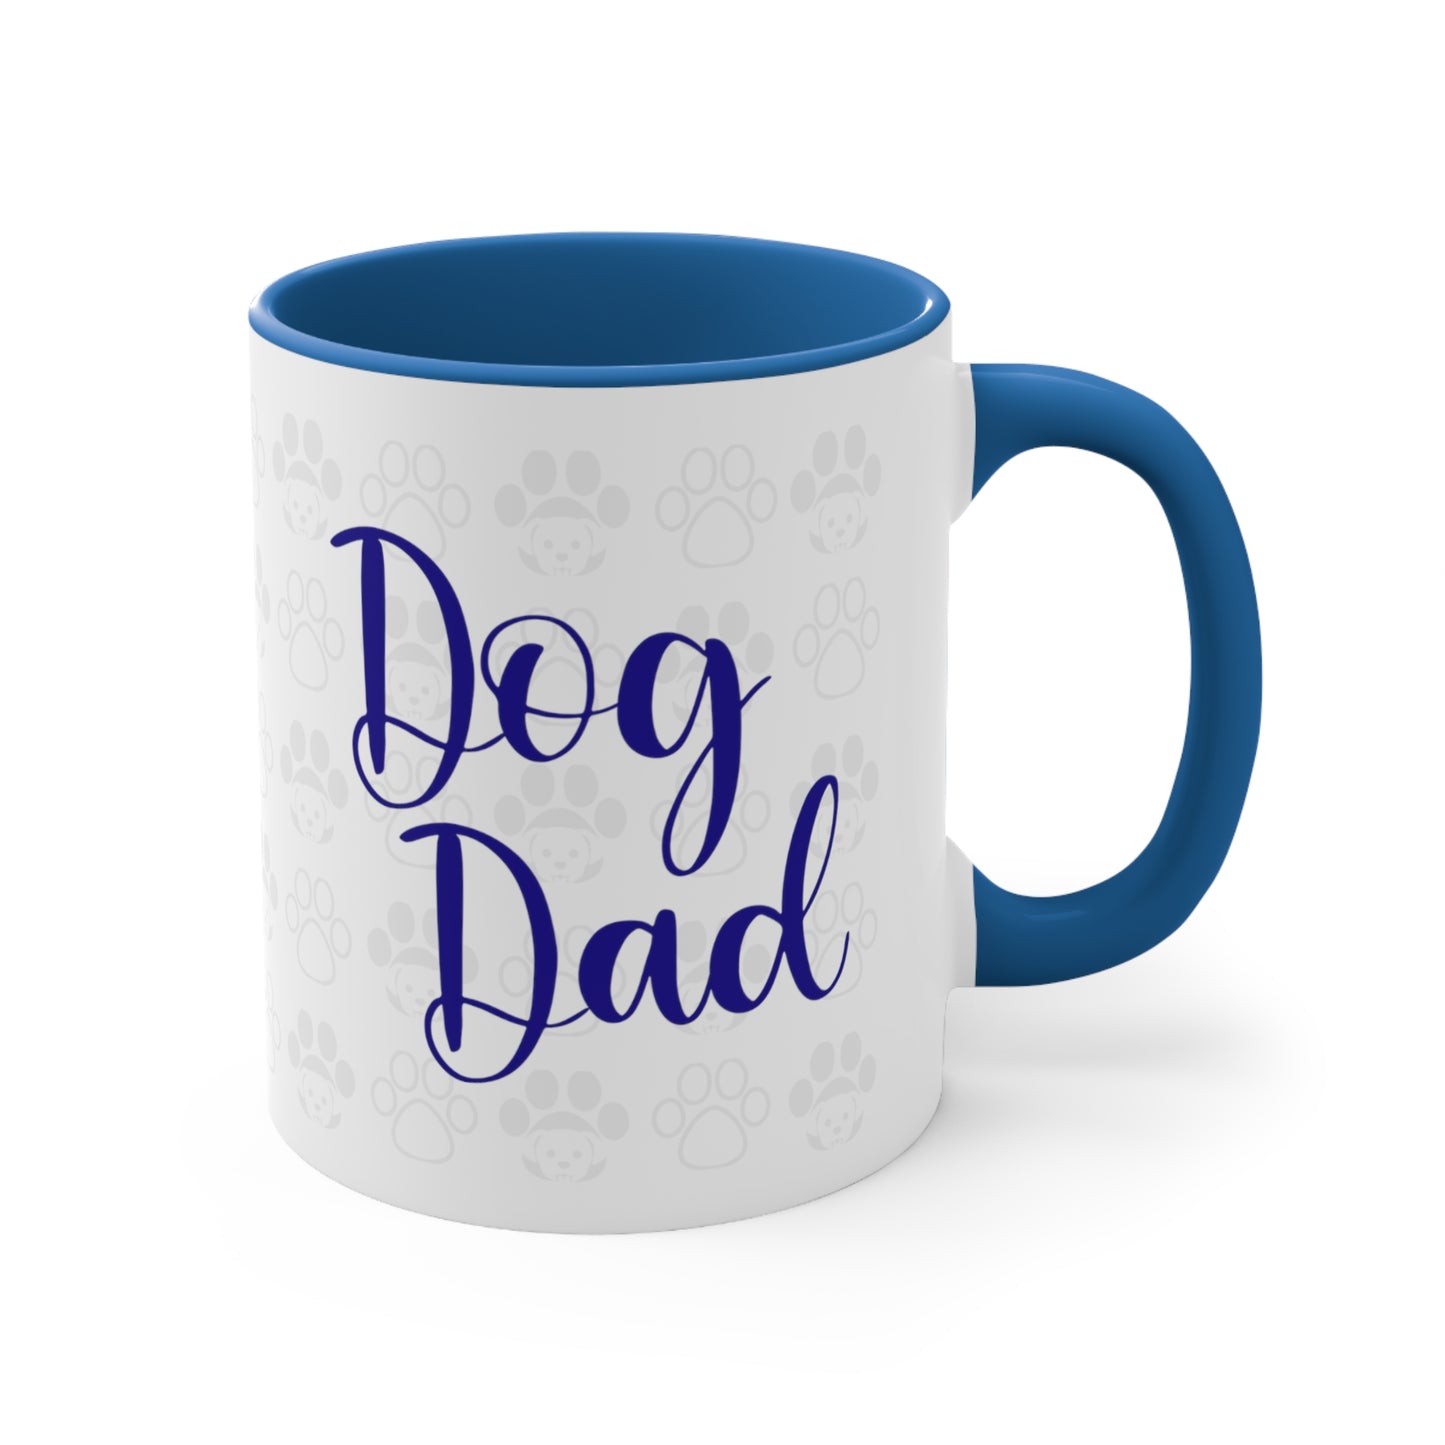 Dog Dad coffee Mug 11 oz, front view in blue.